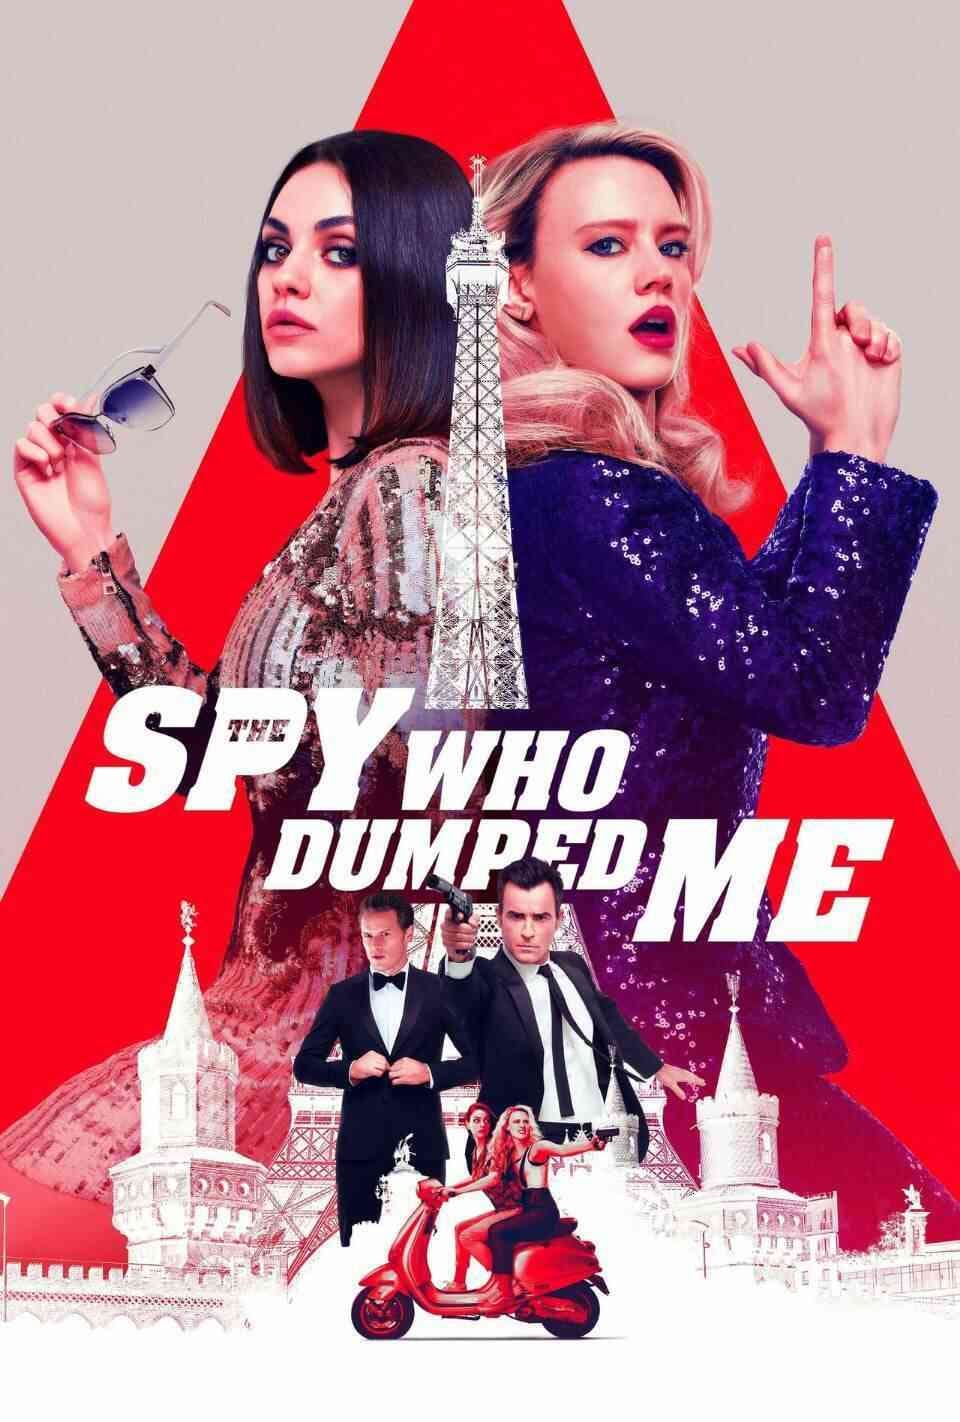 Read The Spy Who Dumped Me screenplay.